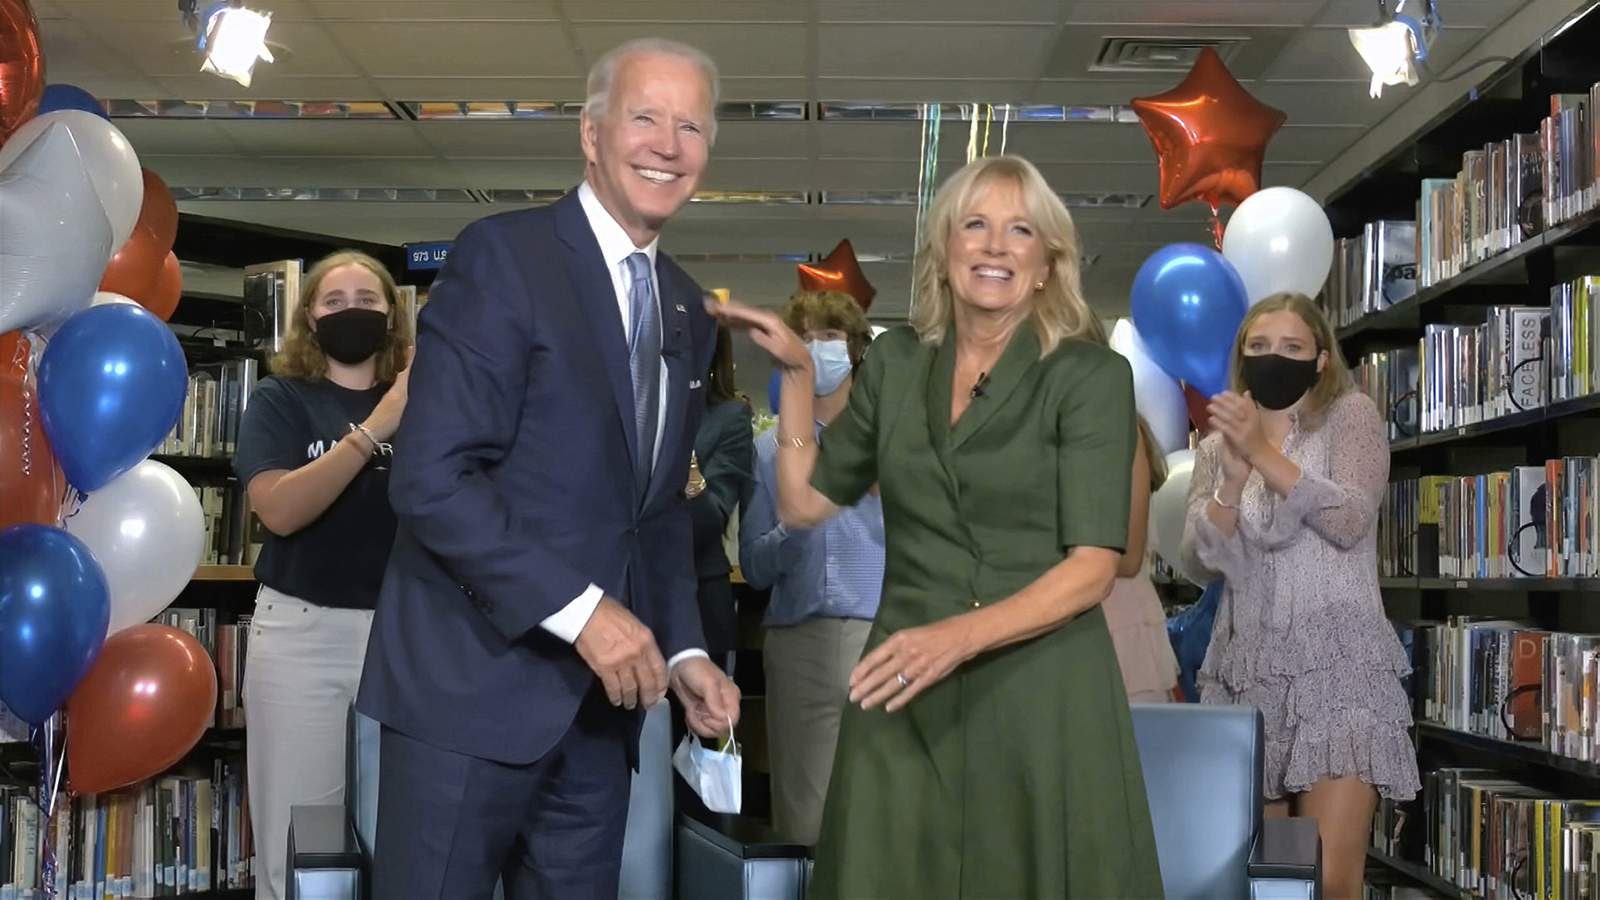 The Latest: Jill Biden makes personal case for husband Joe